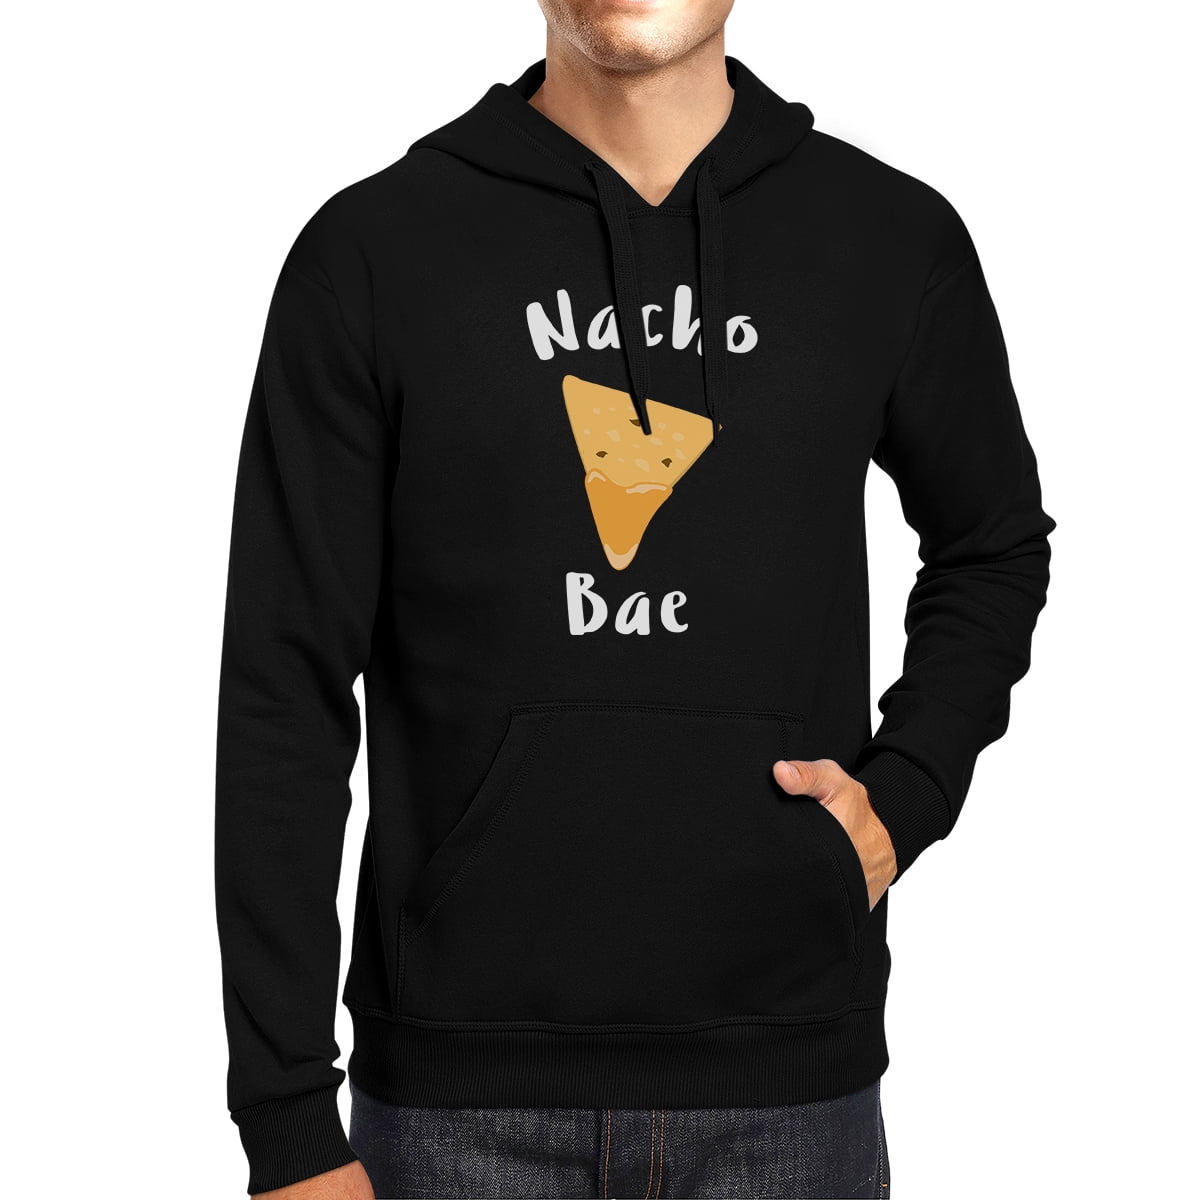 Nacho Bae Unisex Black Hoodie Cute Graphic Funny Gift Food Lovers ...